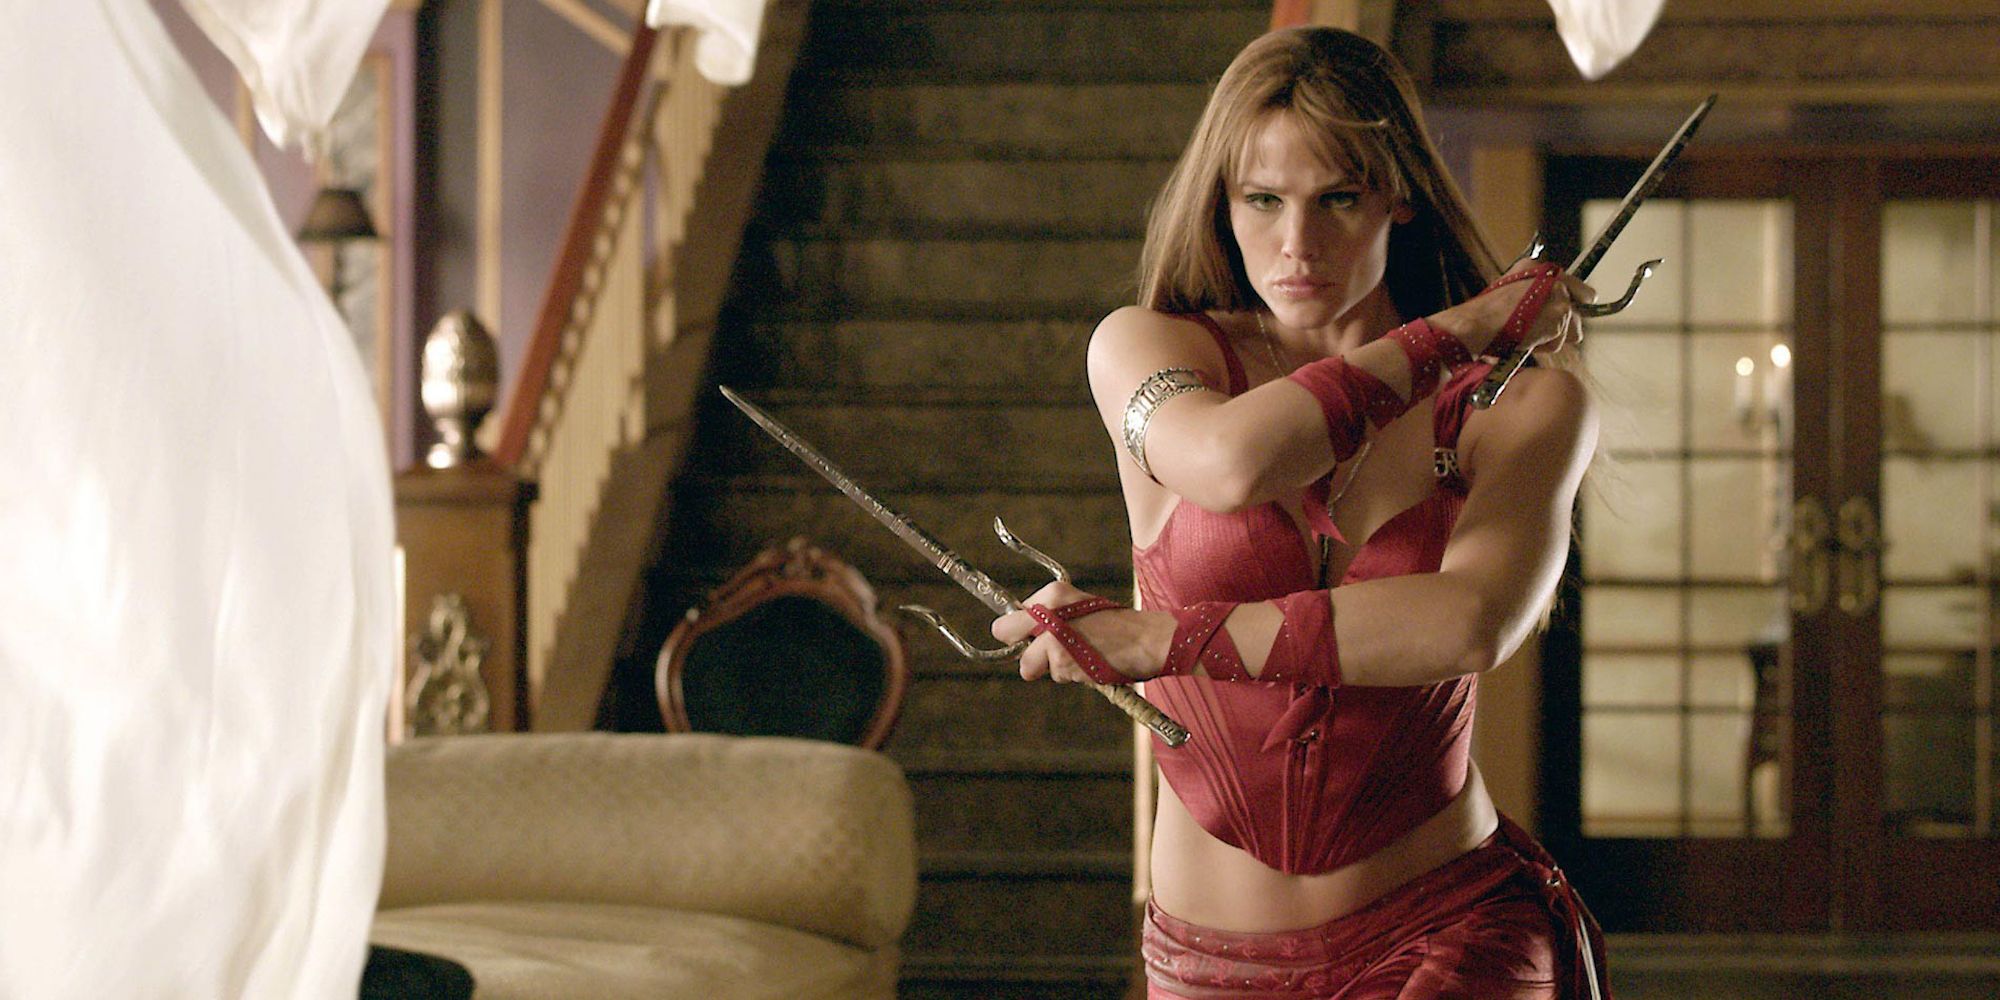 Jennifer Garner as Elektra wielding two sai and walking towards something off-camera in the film 'Elektra.'